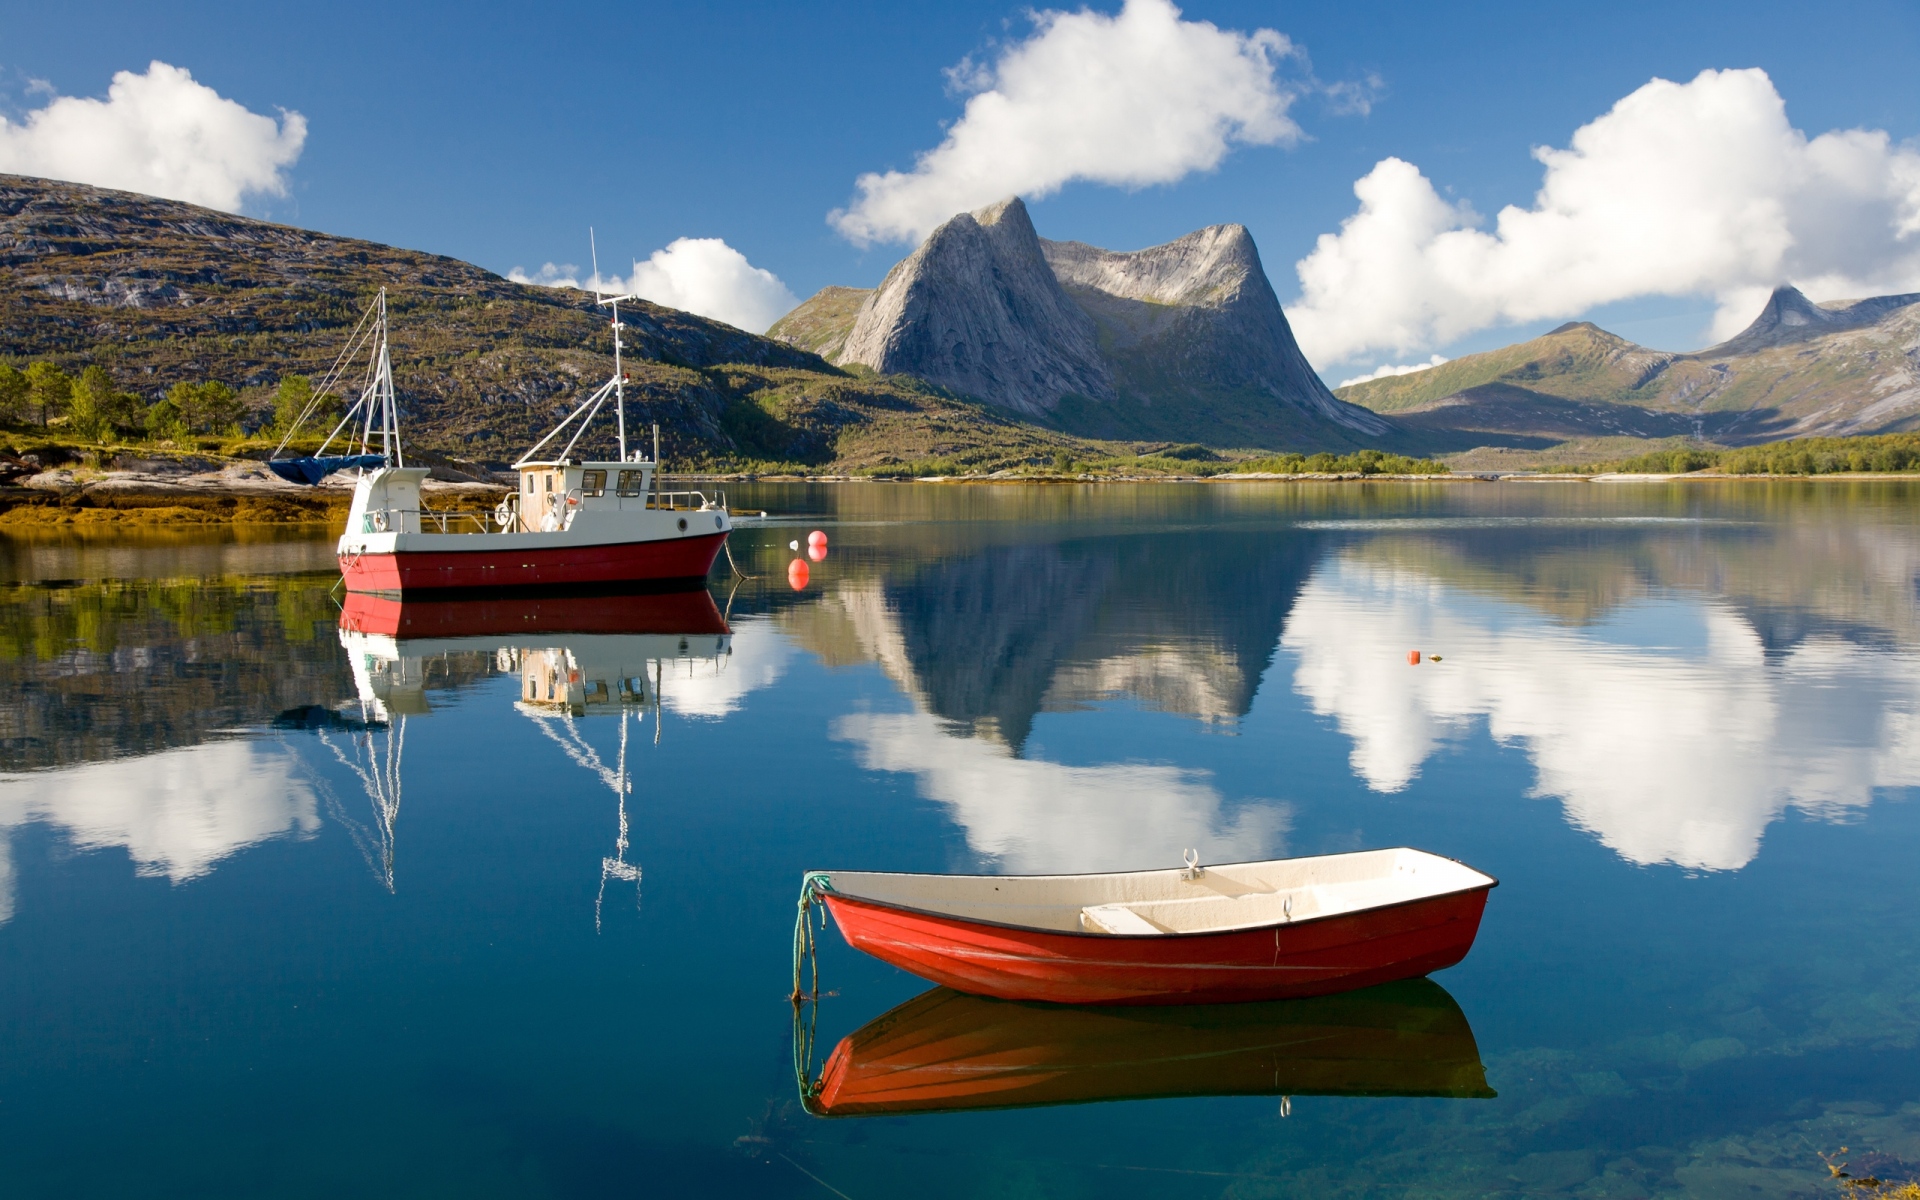 Лодка за 1 час по озеру. Озеро в Норвегии Фьорд. Норвегия фьорды лодка. Йольстер Норвегия озеро. Норвегия фьорды яхта пейзаж.